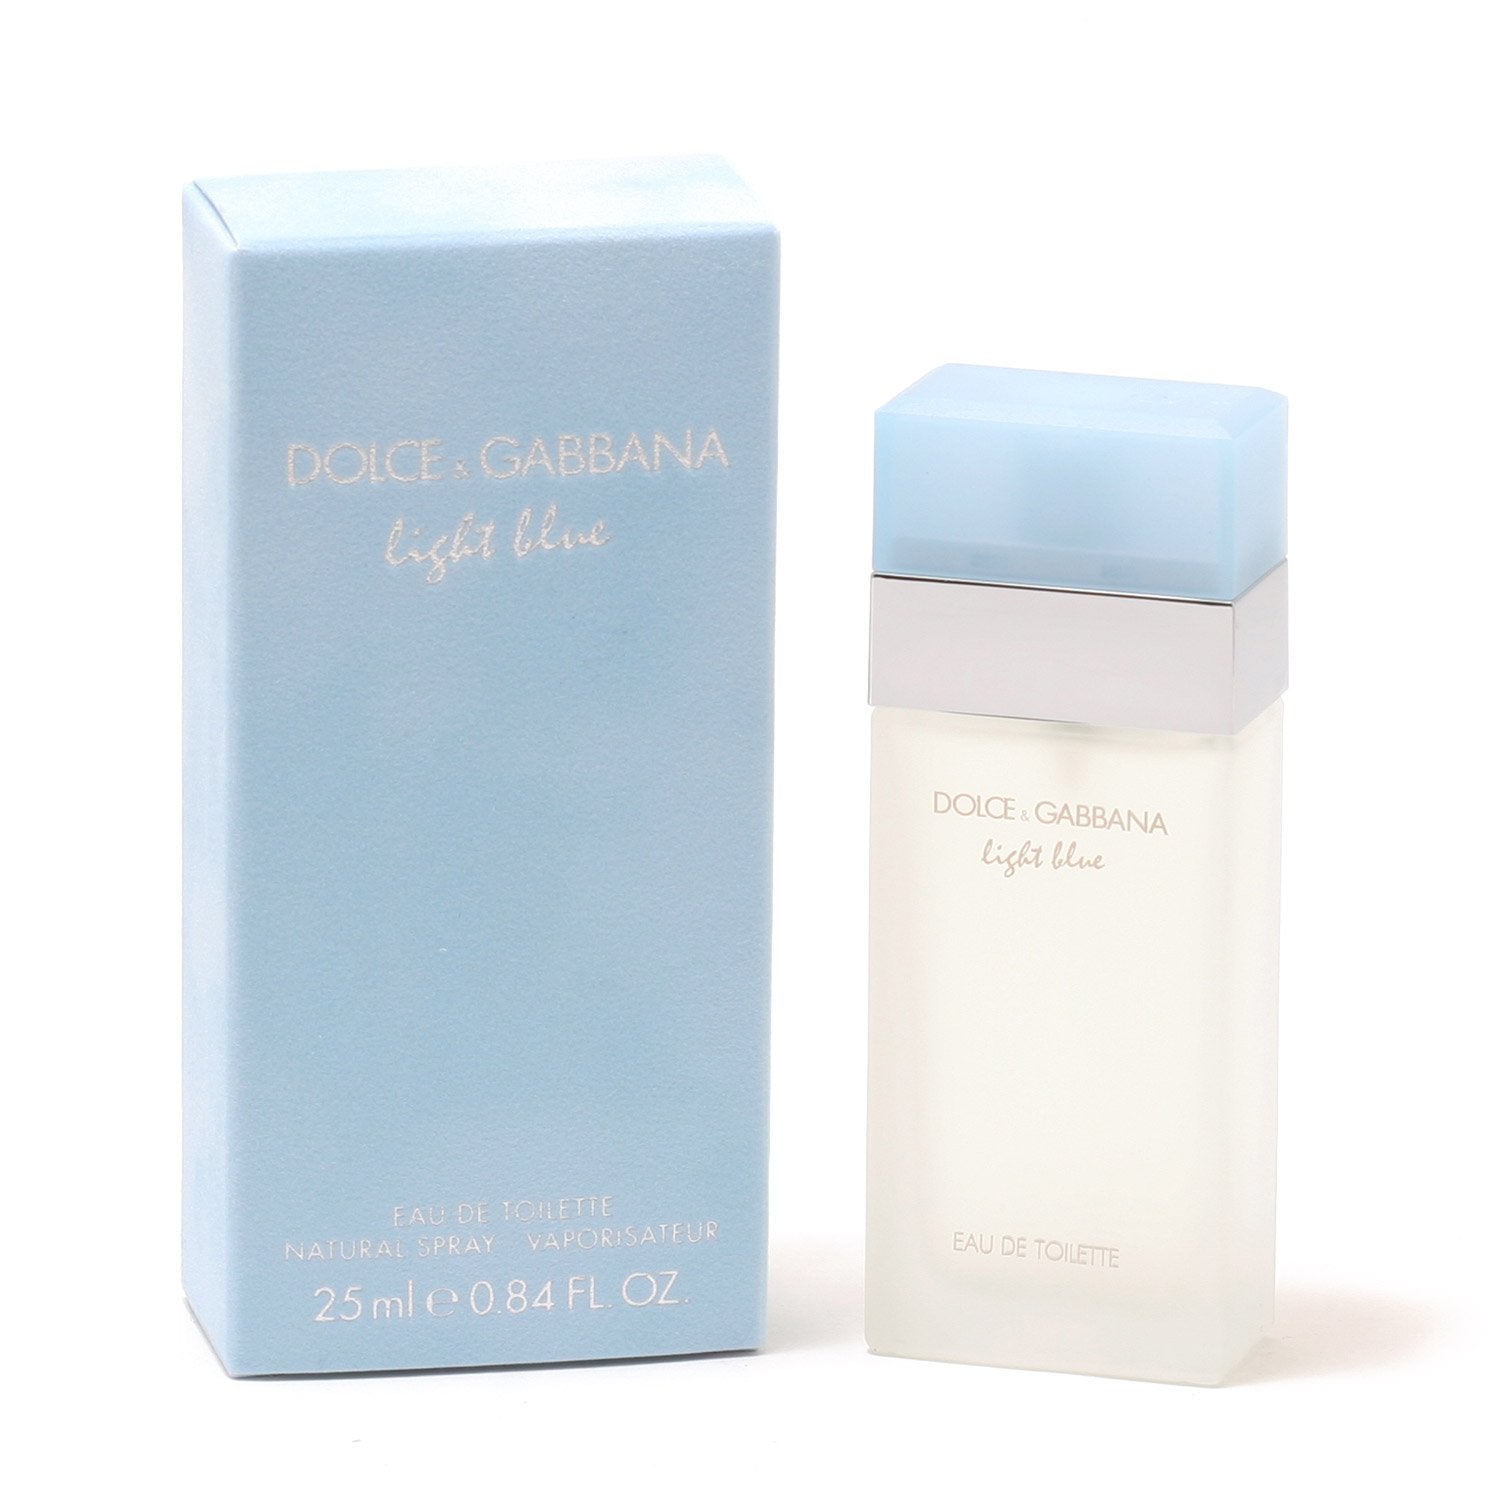 cheap light blue perfume dolce gabbana